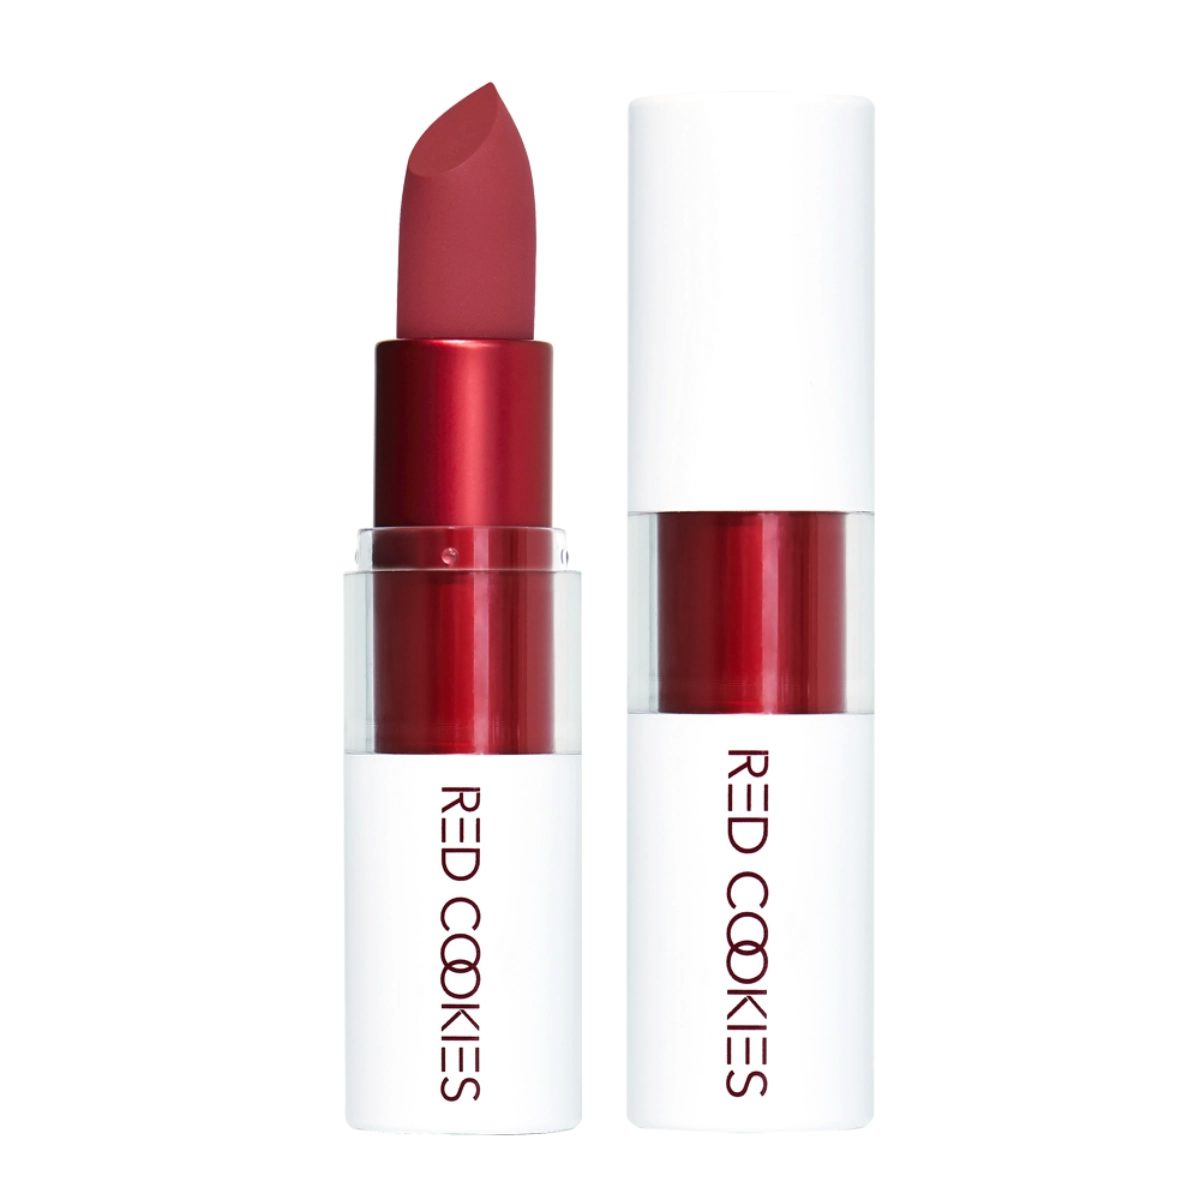 Marshmallow powder lipstick - A4 Saigon Melo